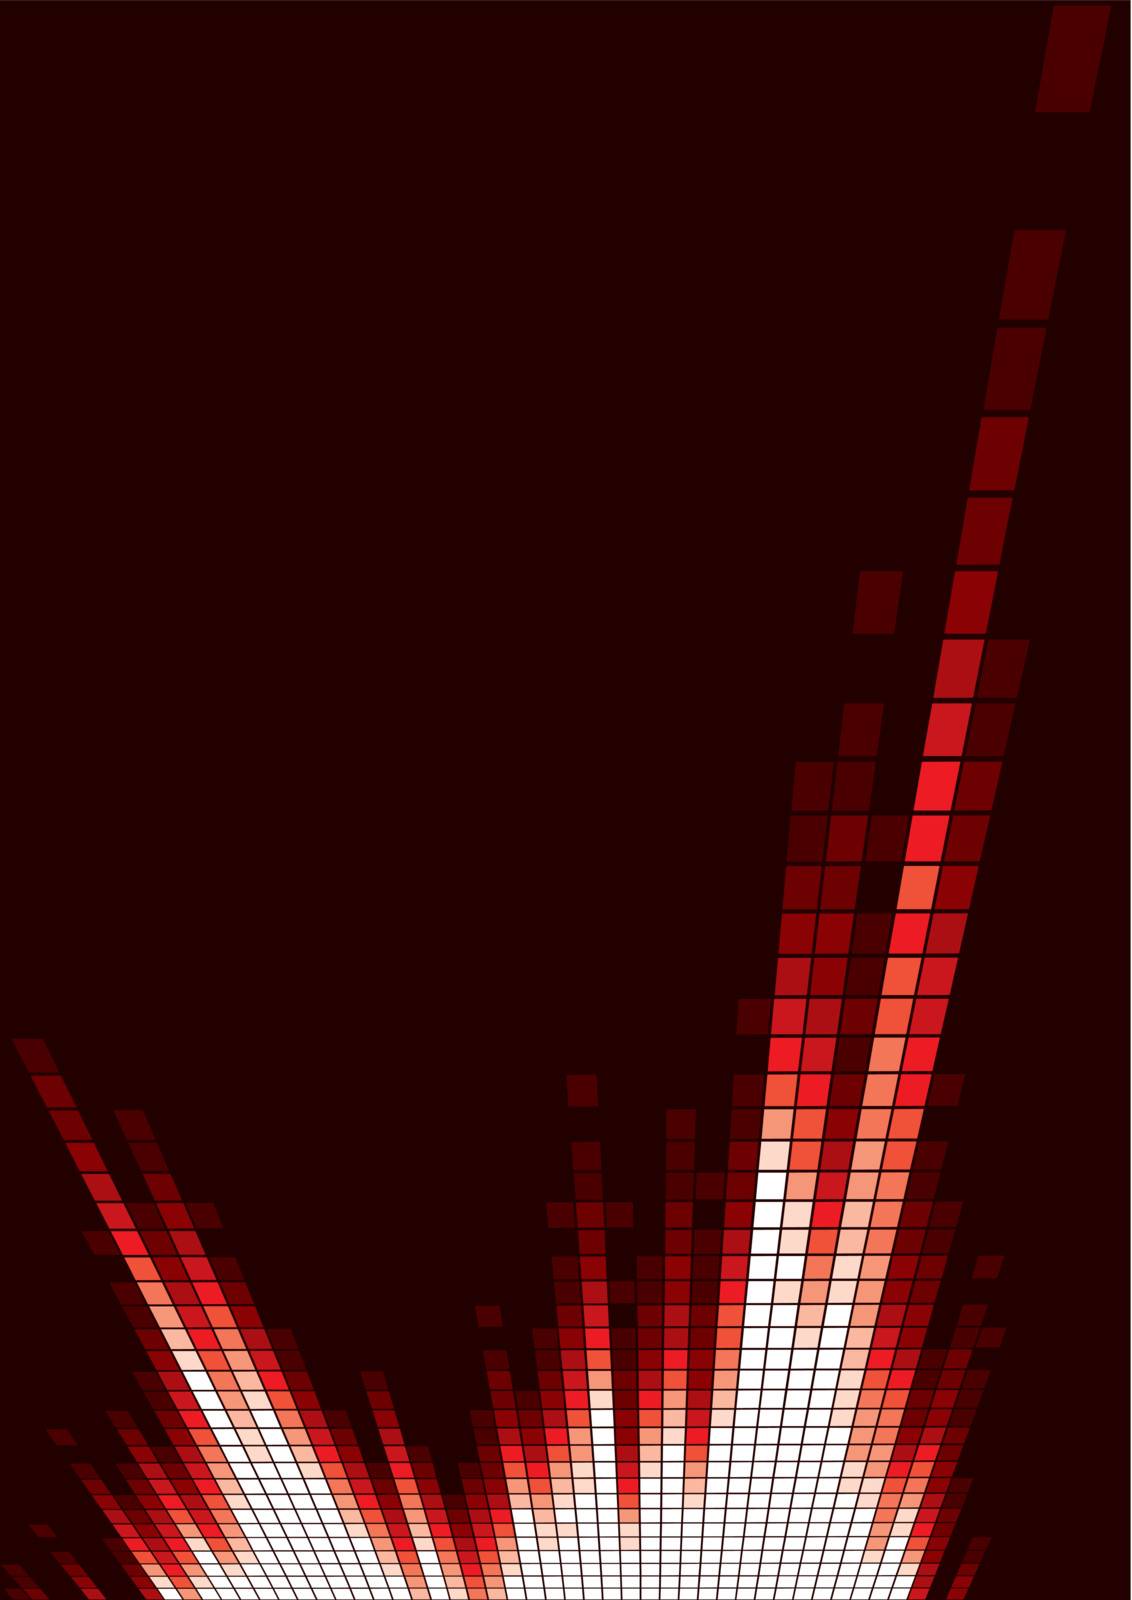 Red digital music analyzer on black background